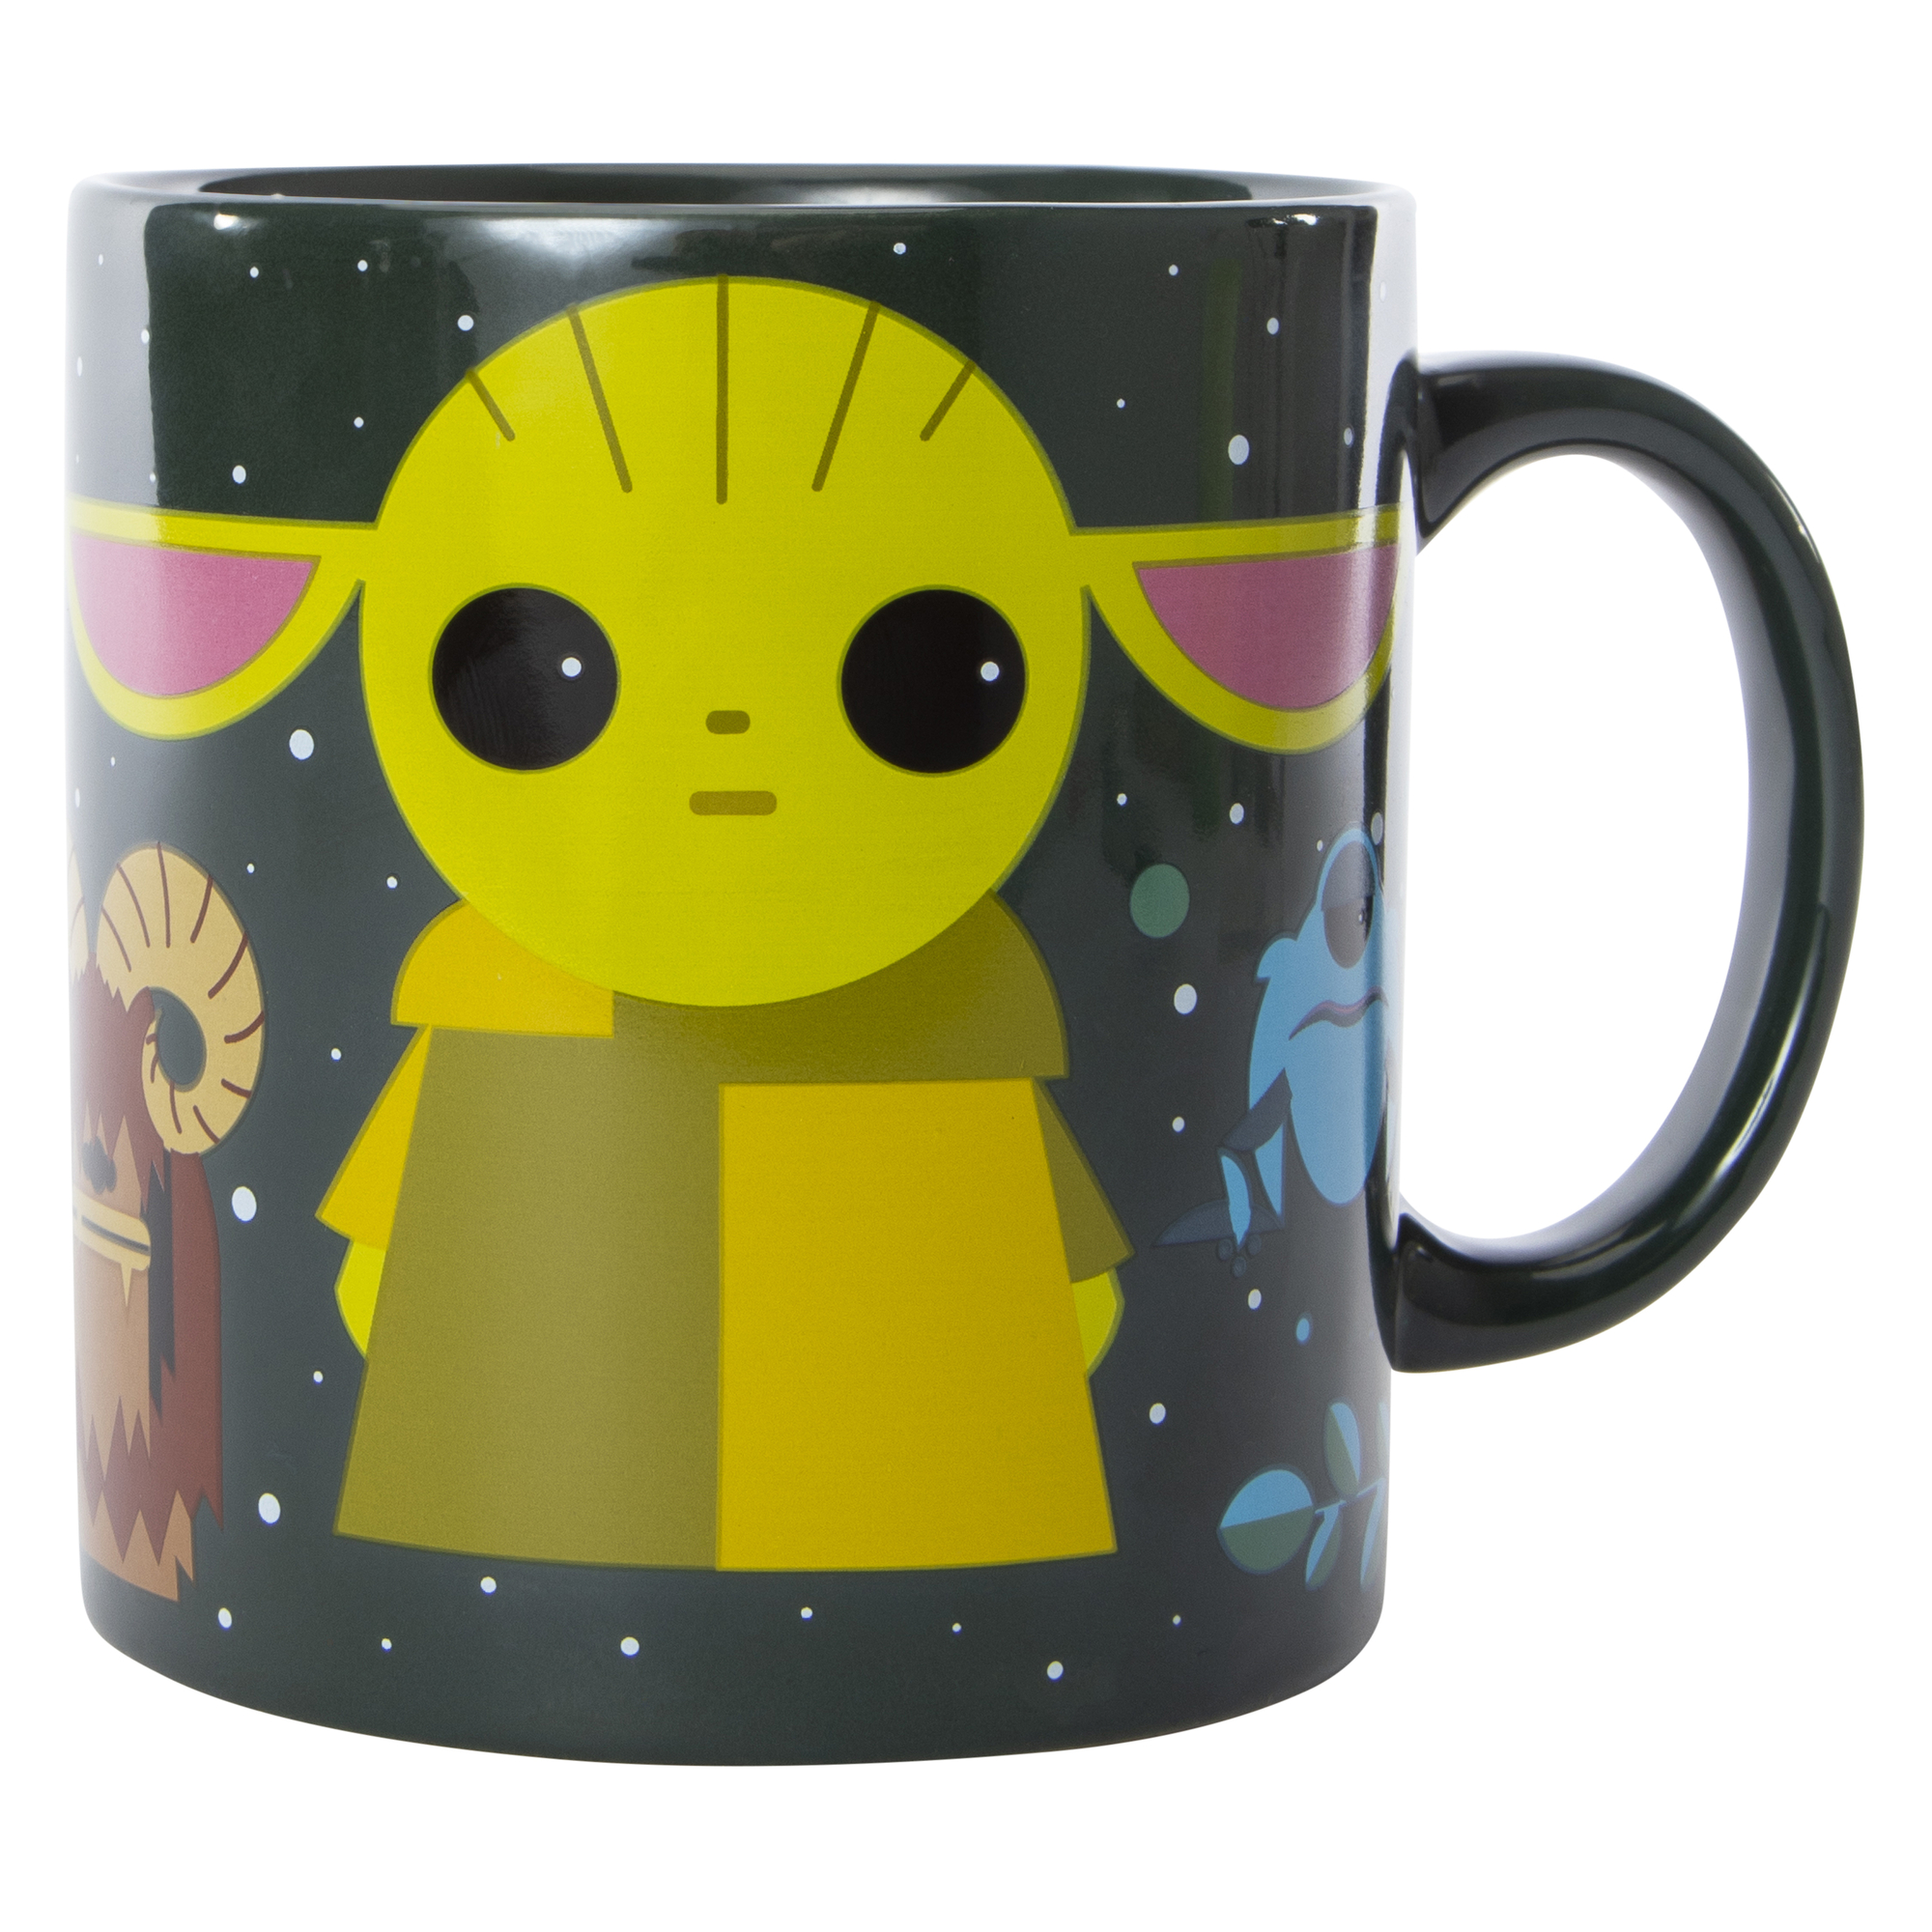 Star Wars the Mandalorian ceramic mug